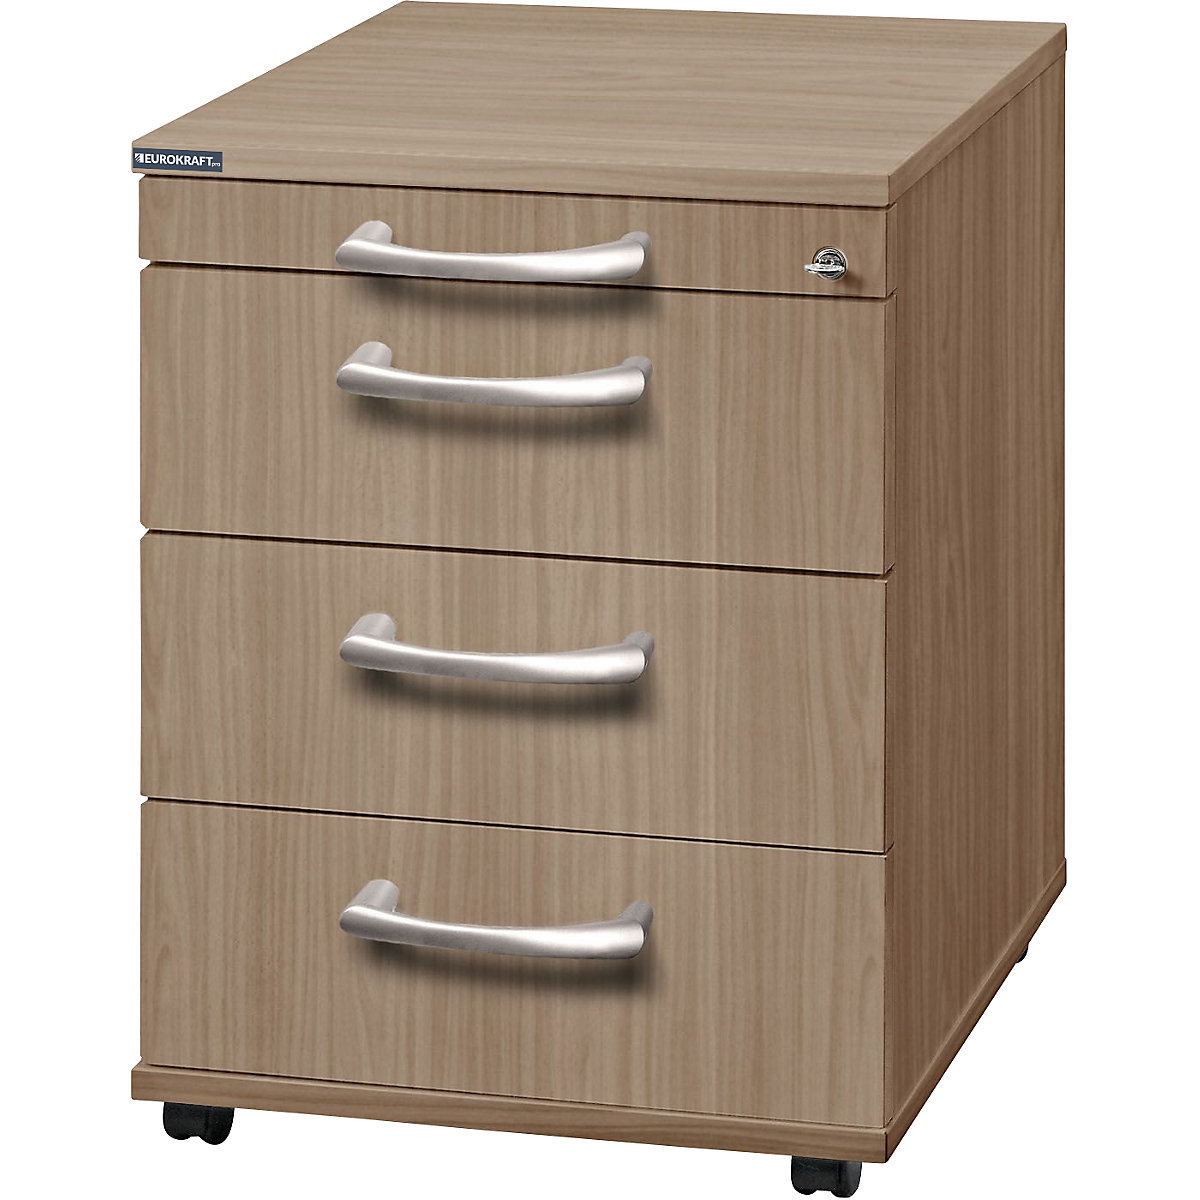 Mobile pedestal ANNY – eurokraft pro, 1 utensil drawer, 3 drawers, depth 580 mm, walnut finish-6